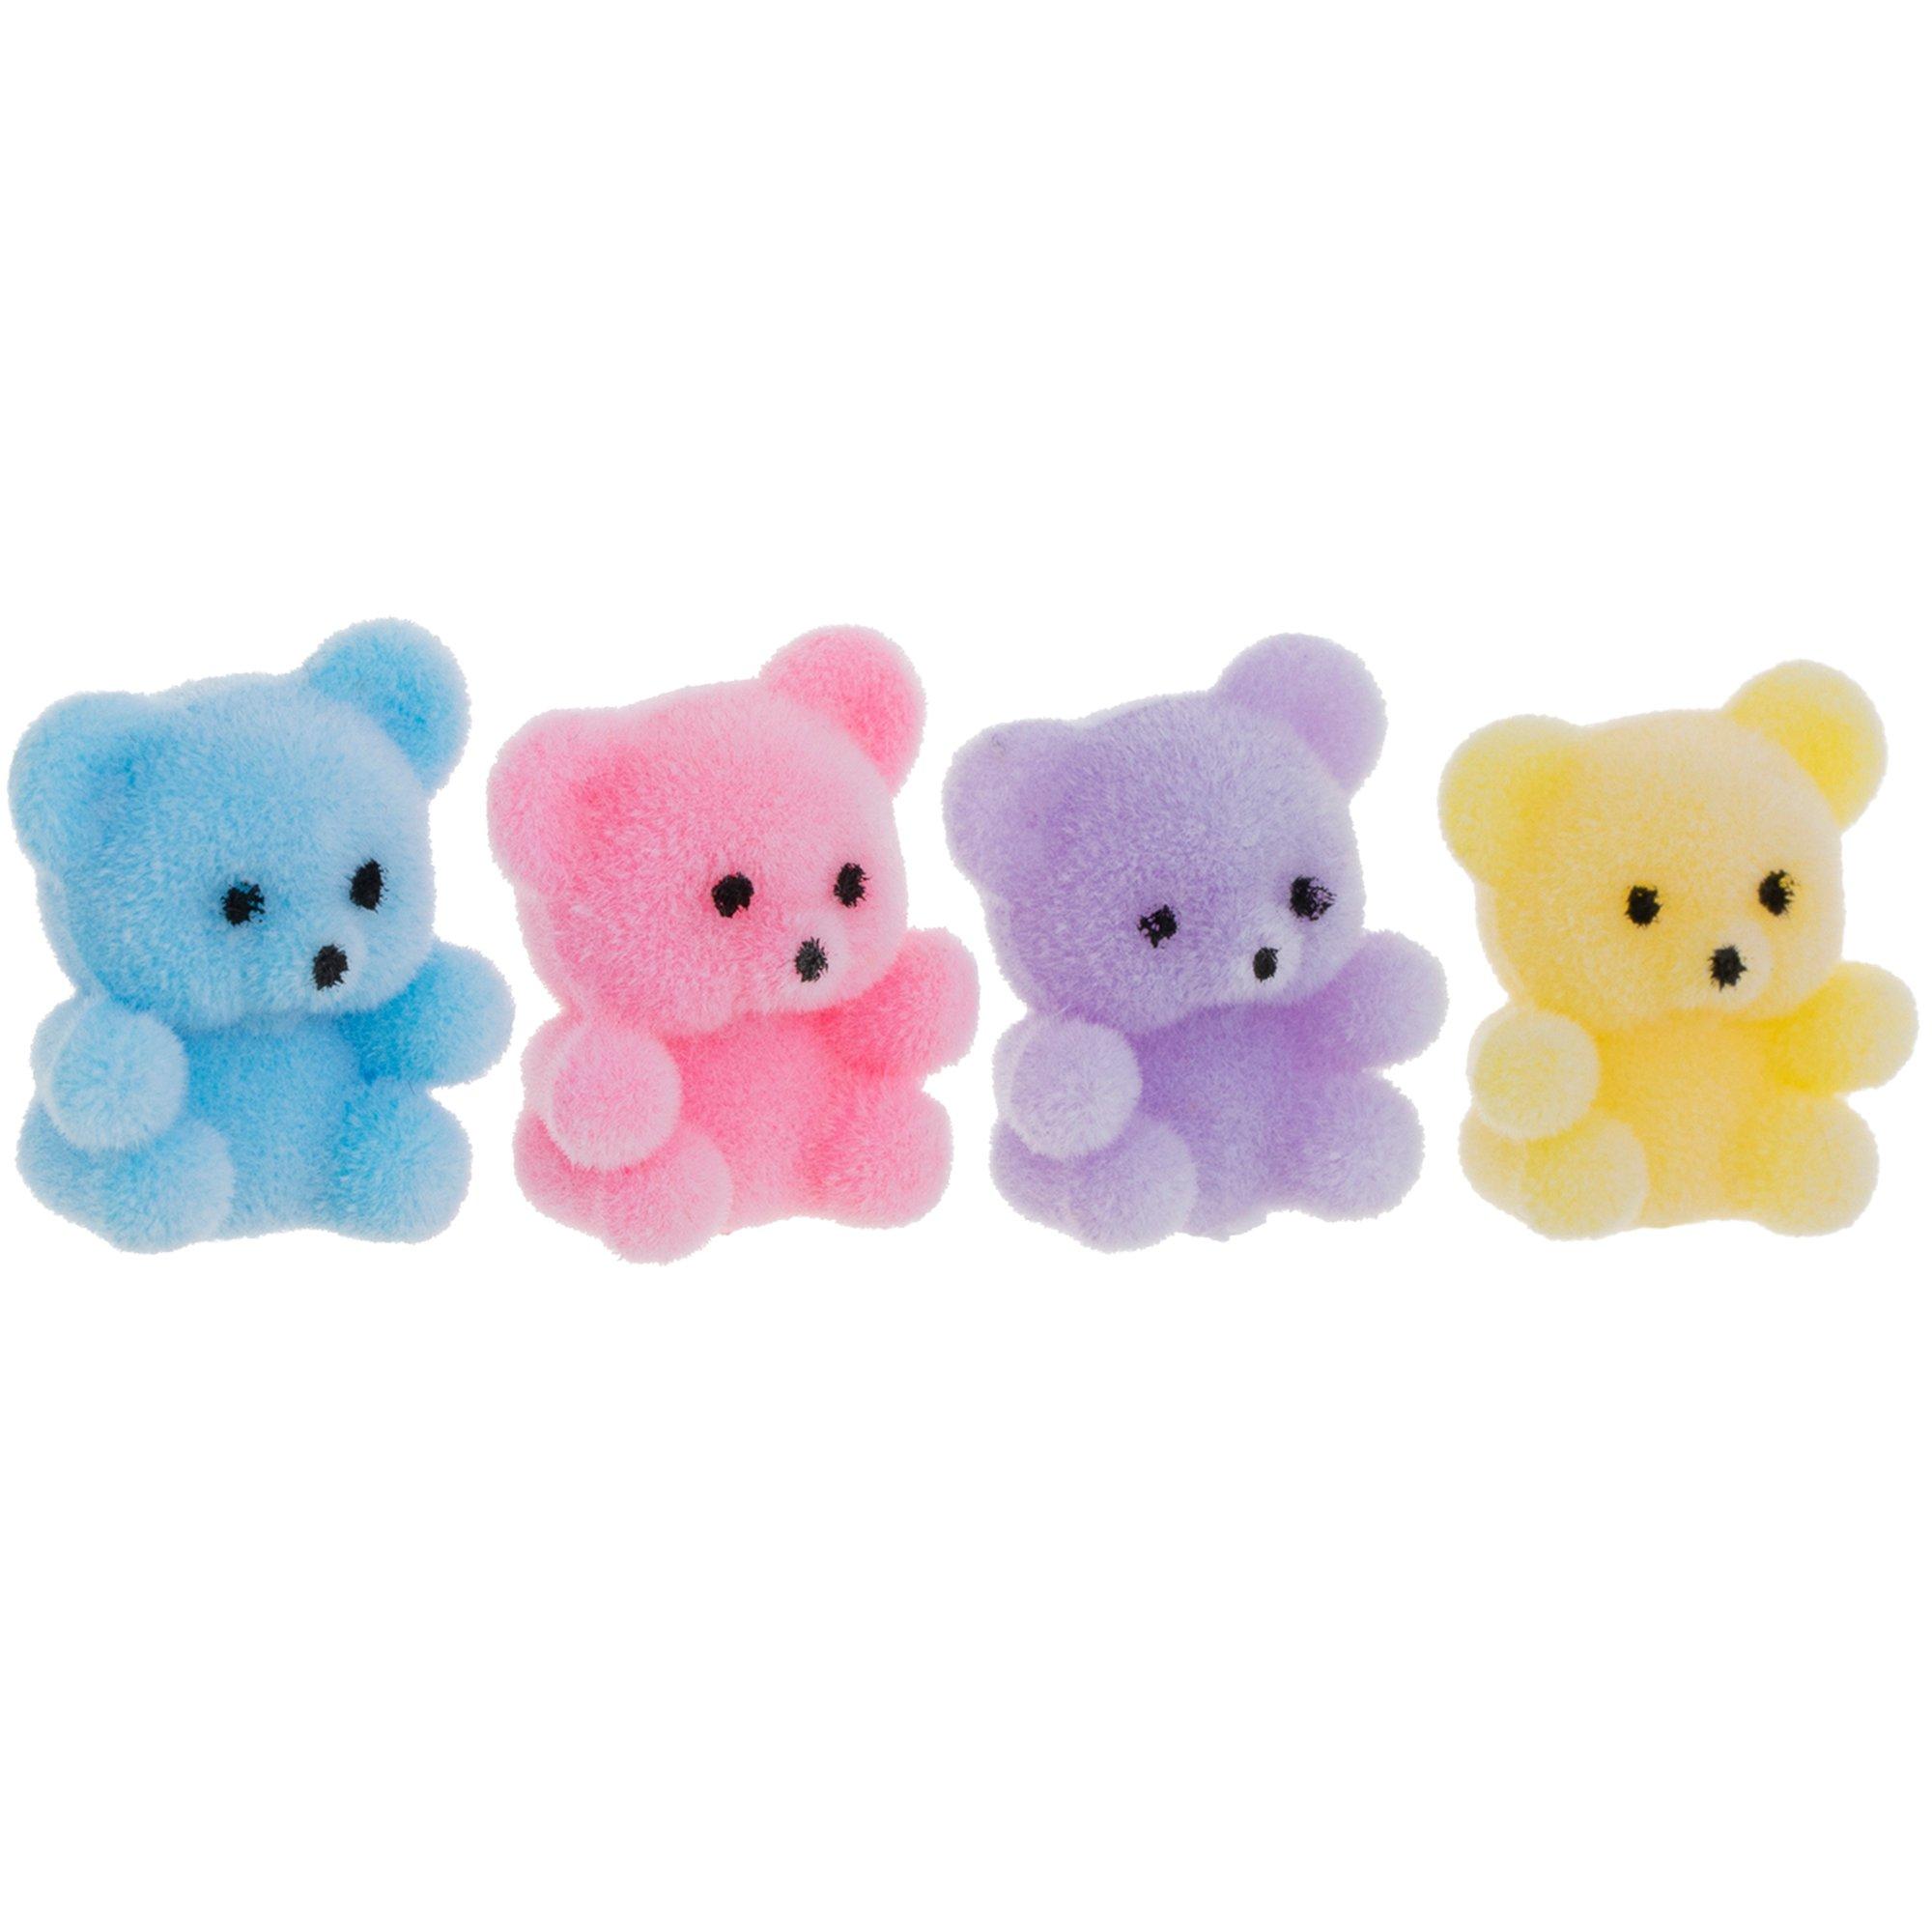 Miniature Pastel Teddy Bears Hobby Lobby 224691